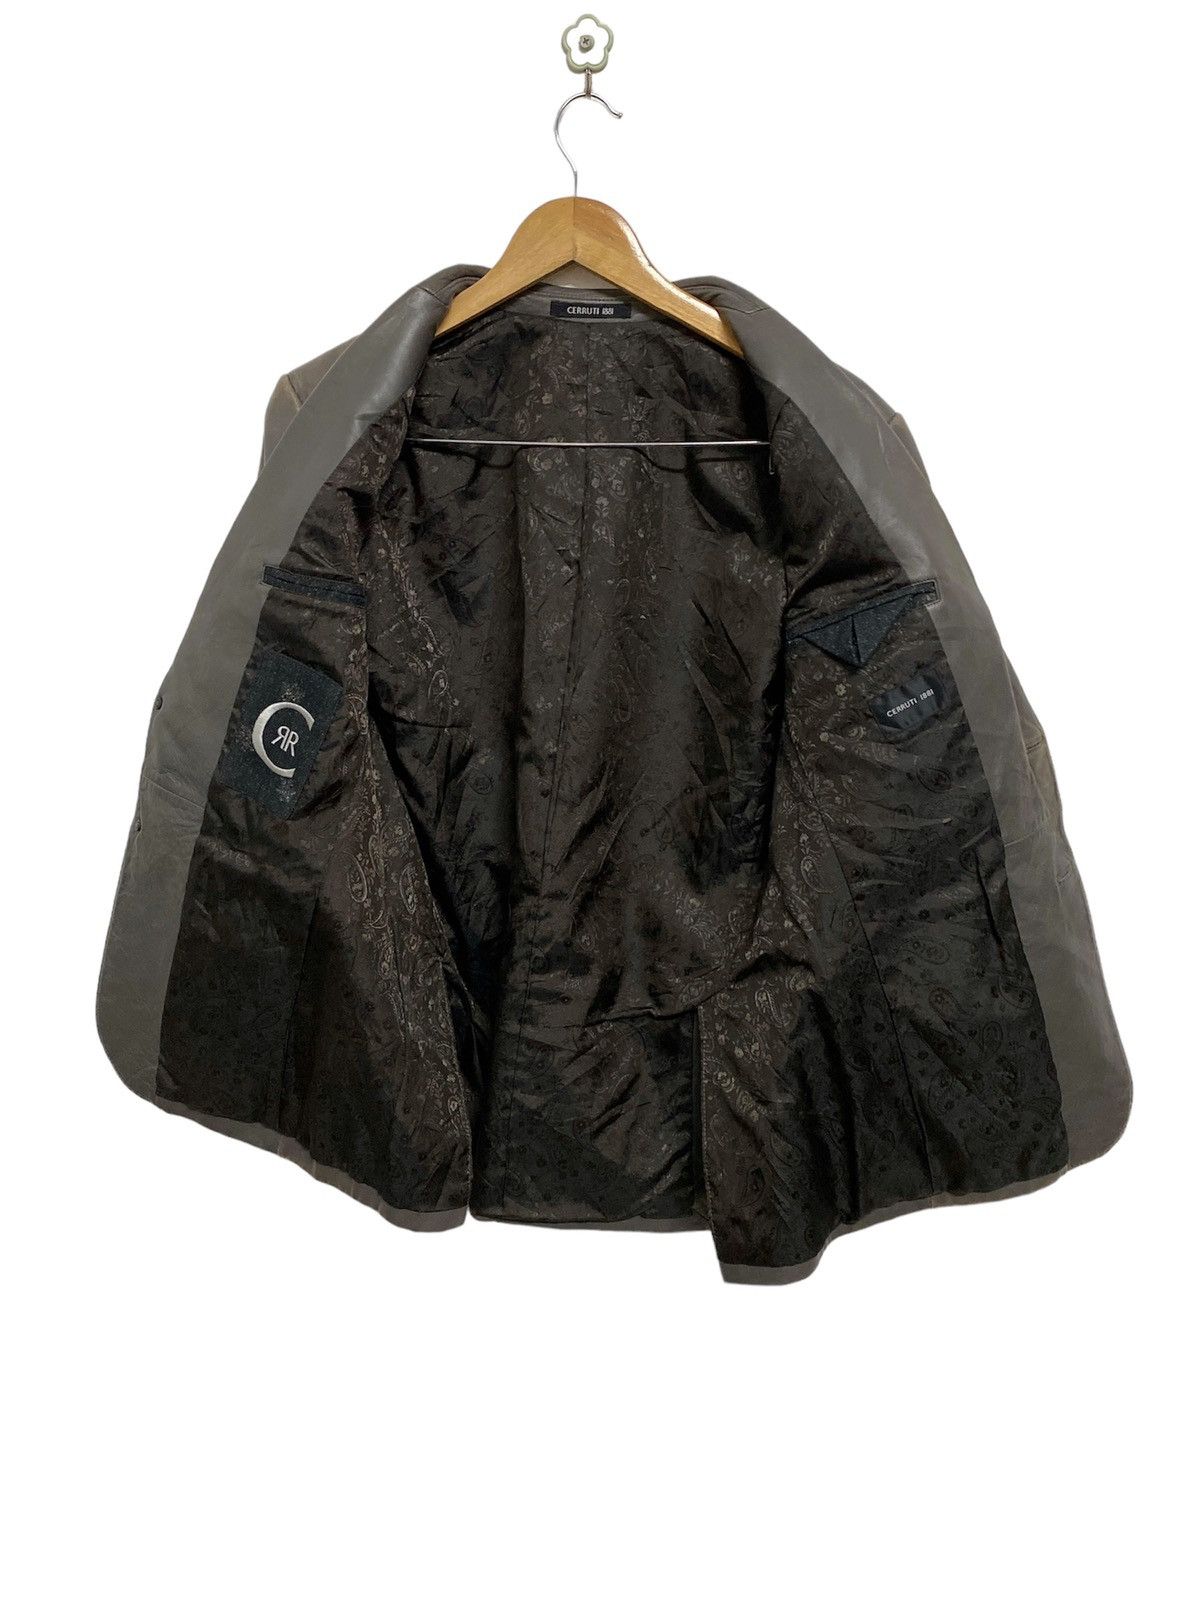 Cerruti 1881 Lambskin Leather Jacket - 7